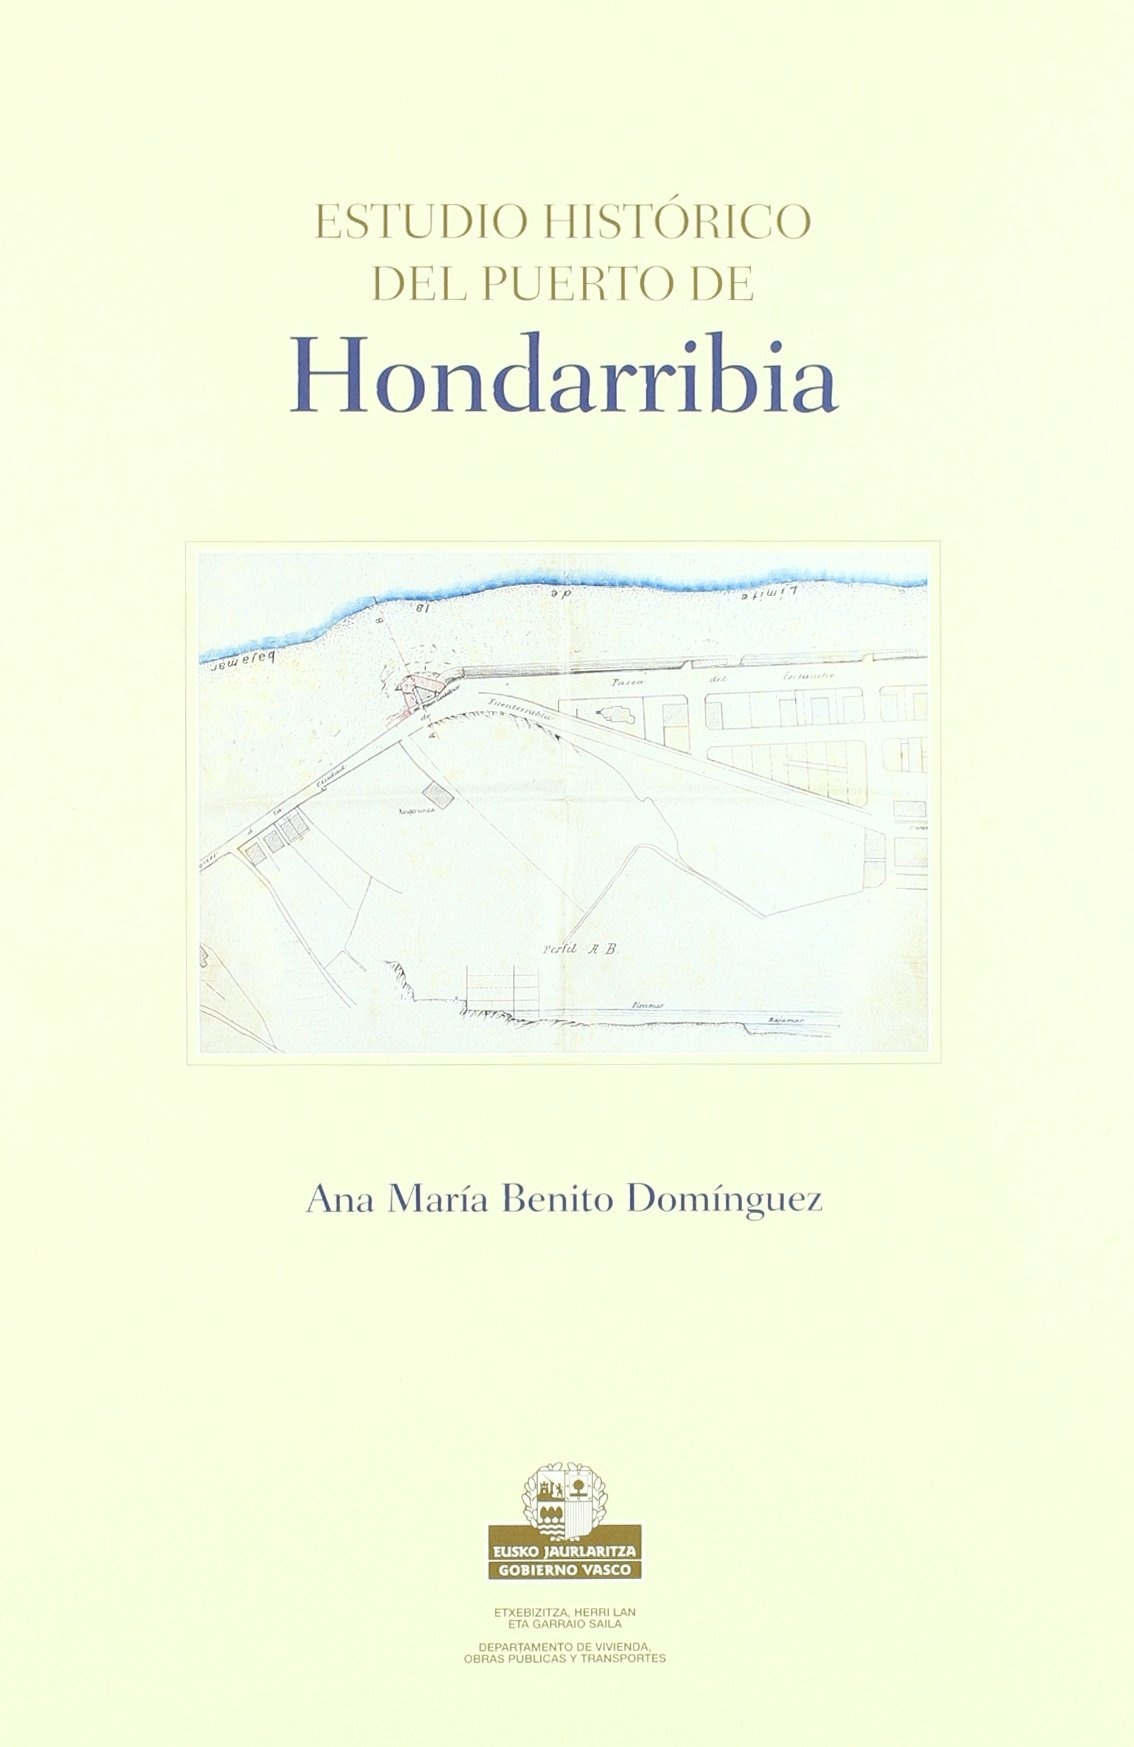 Estudio histórico del puerto de Hondarribia